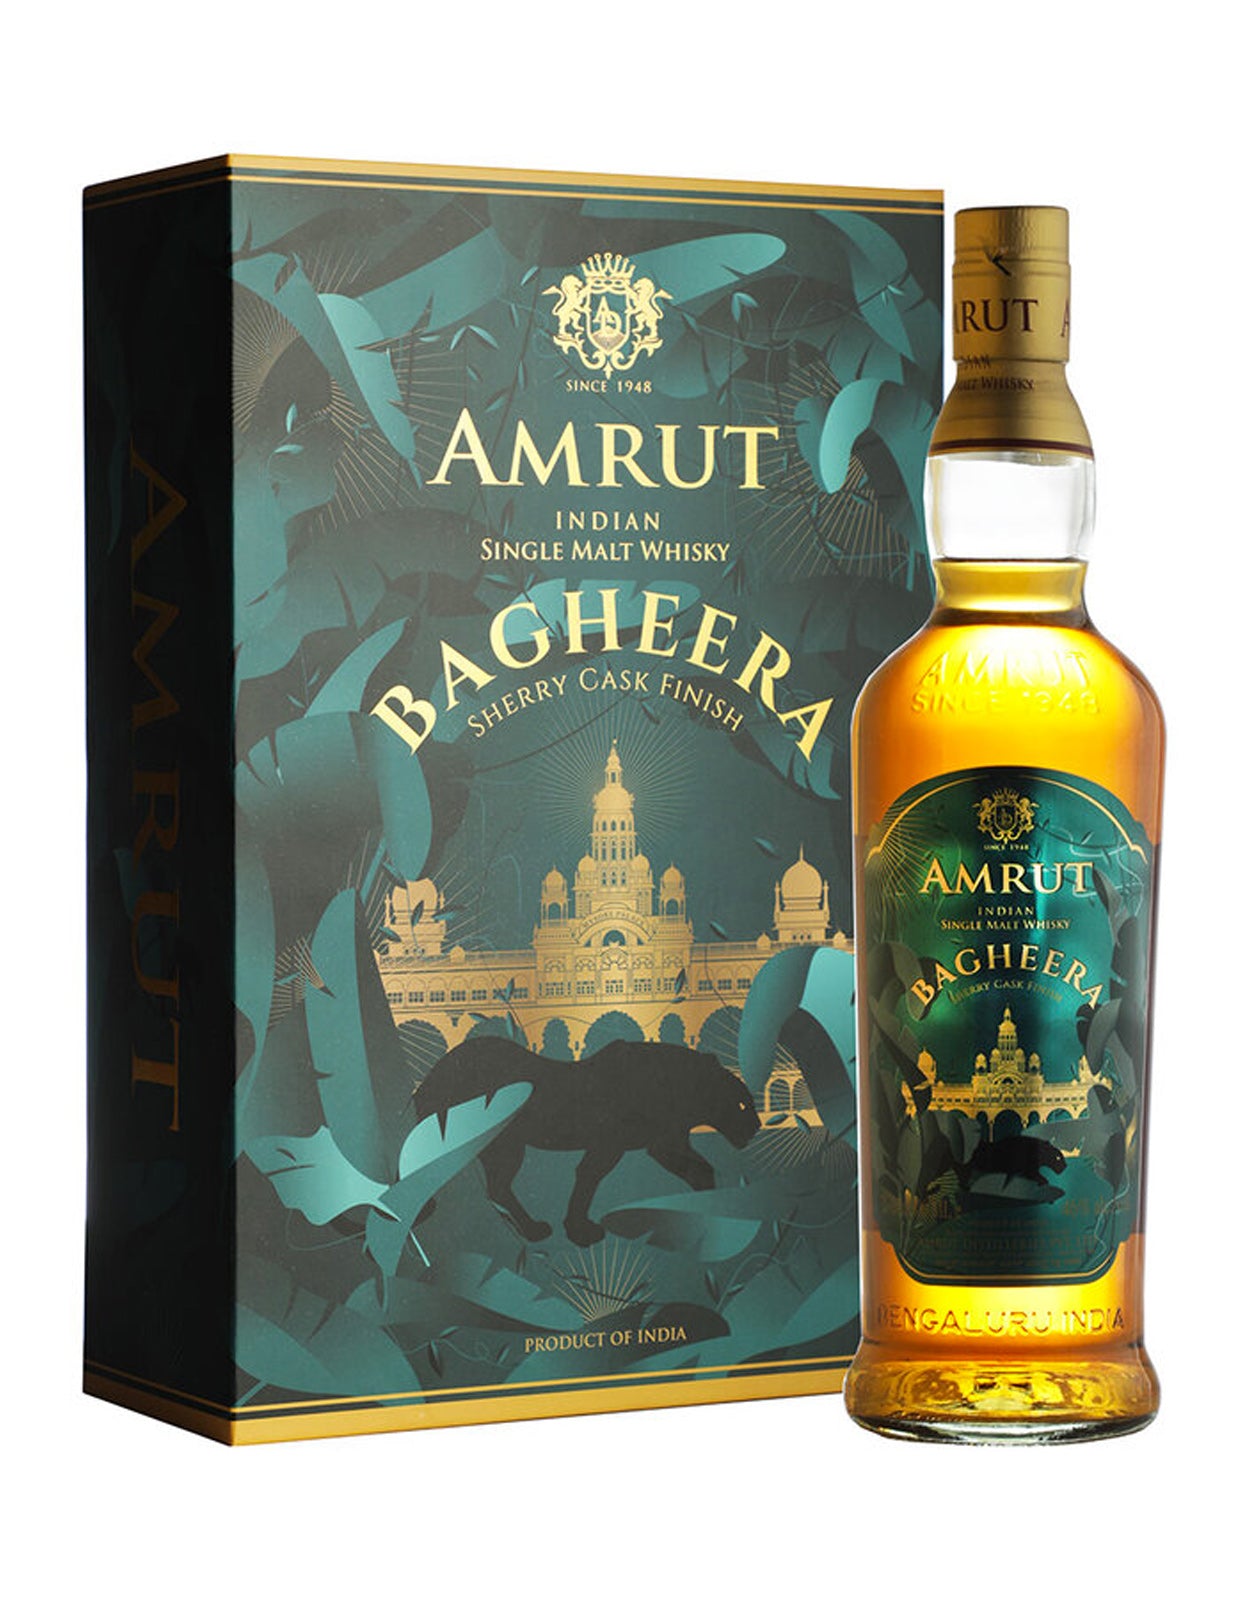 Amrut Bagheera Single Malt Whisky